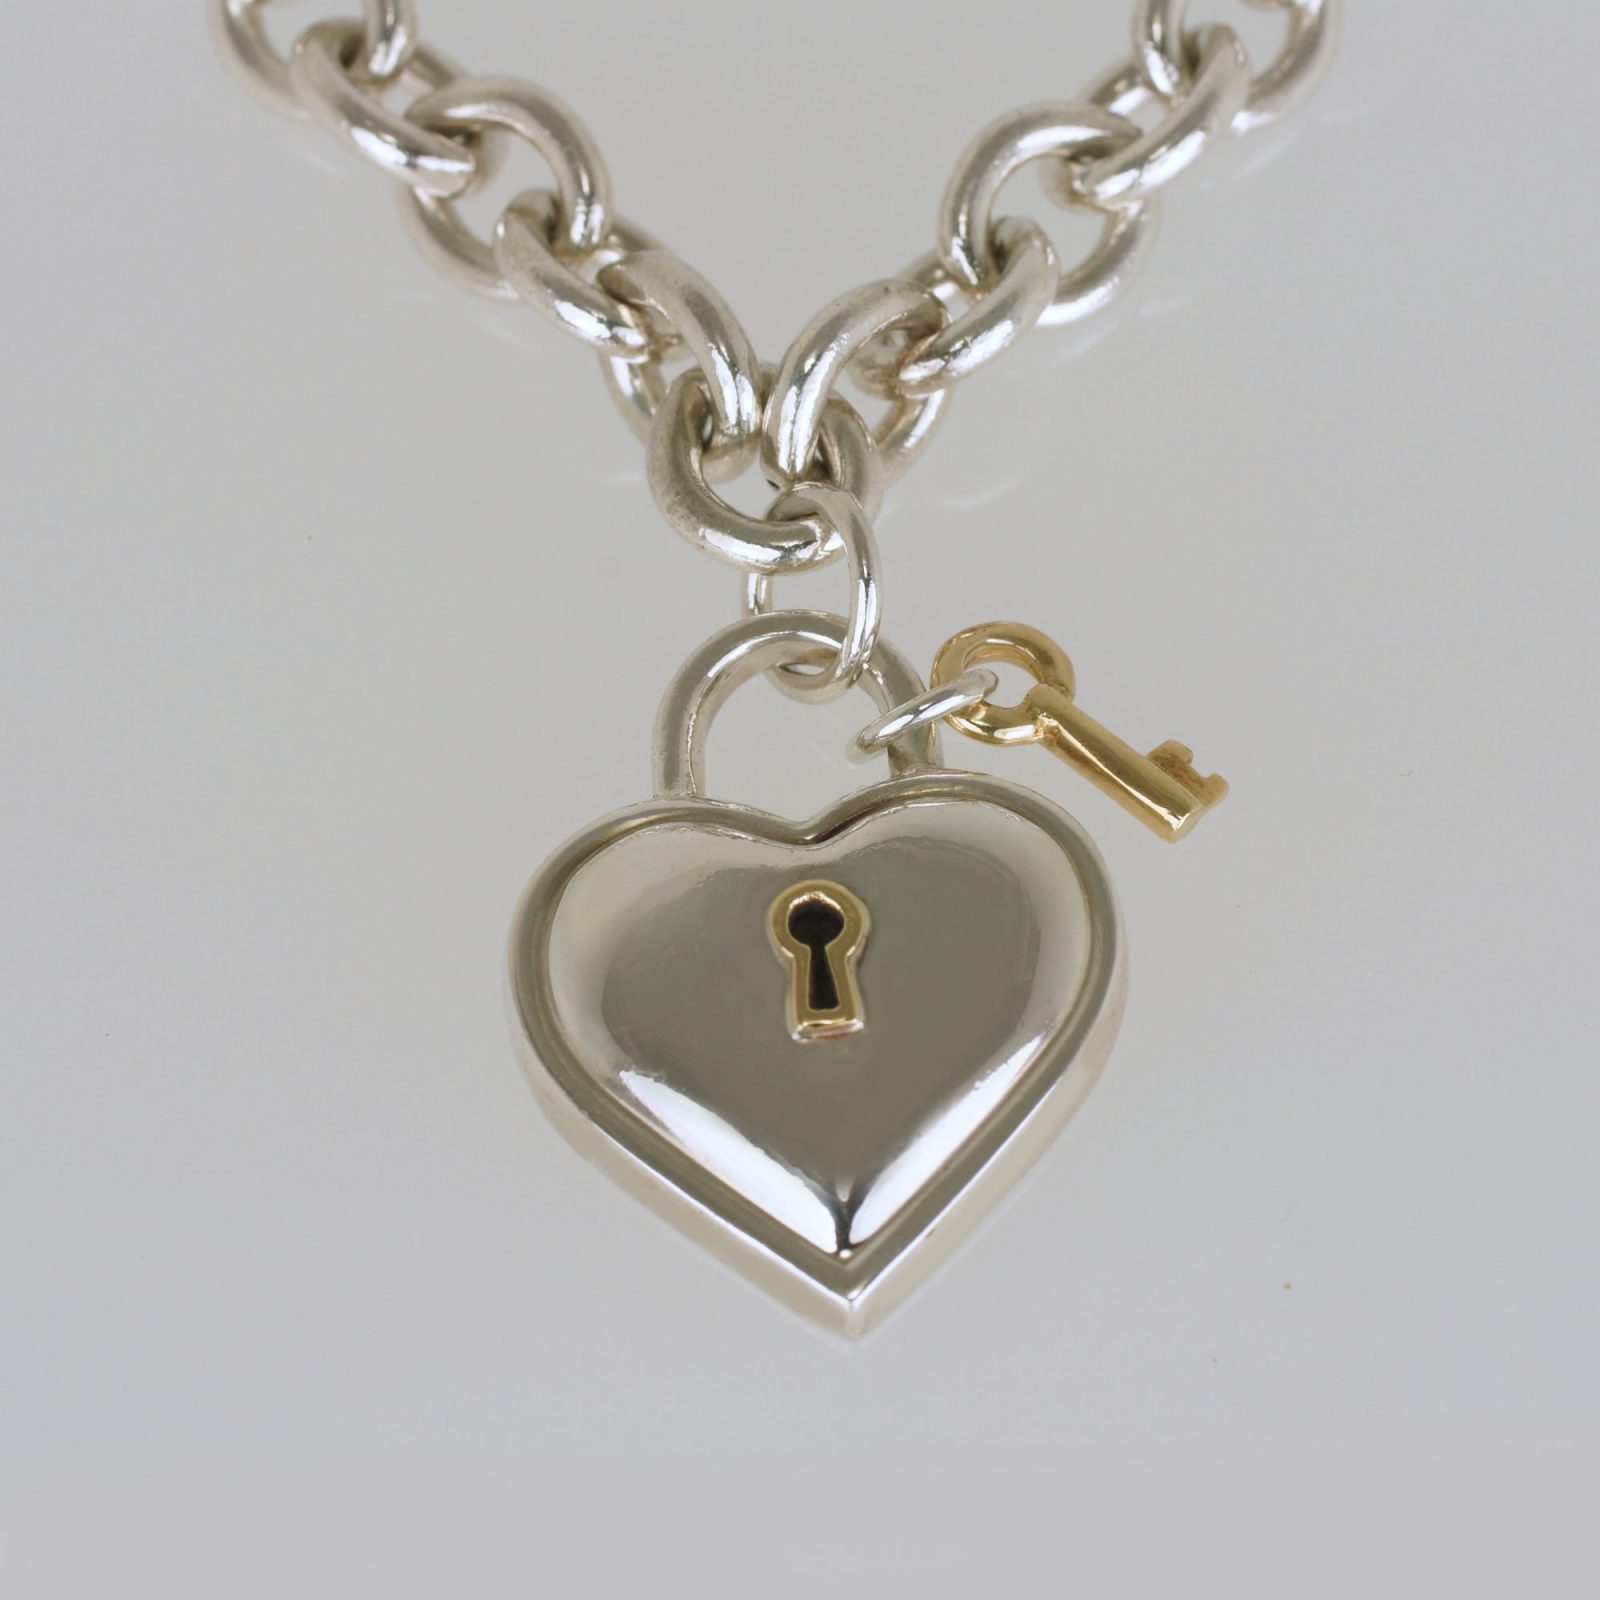 Tiffany Necklace Love Lock and Gold Key - The Chelsea Bijouterie - Paula